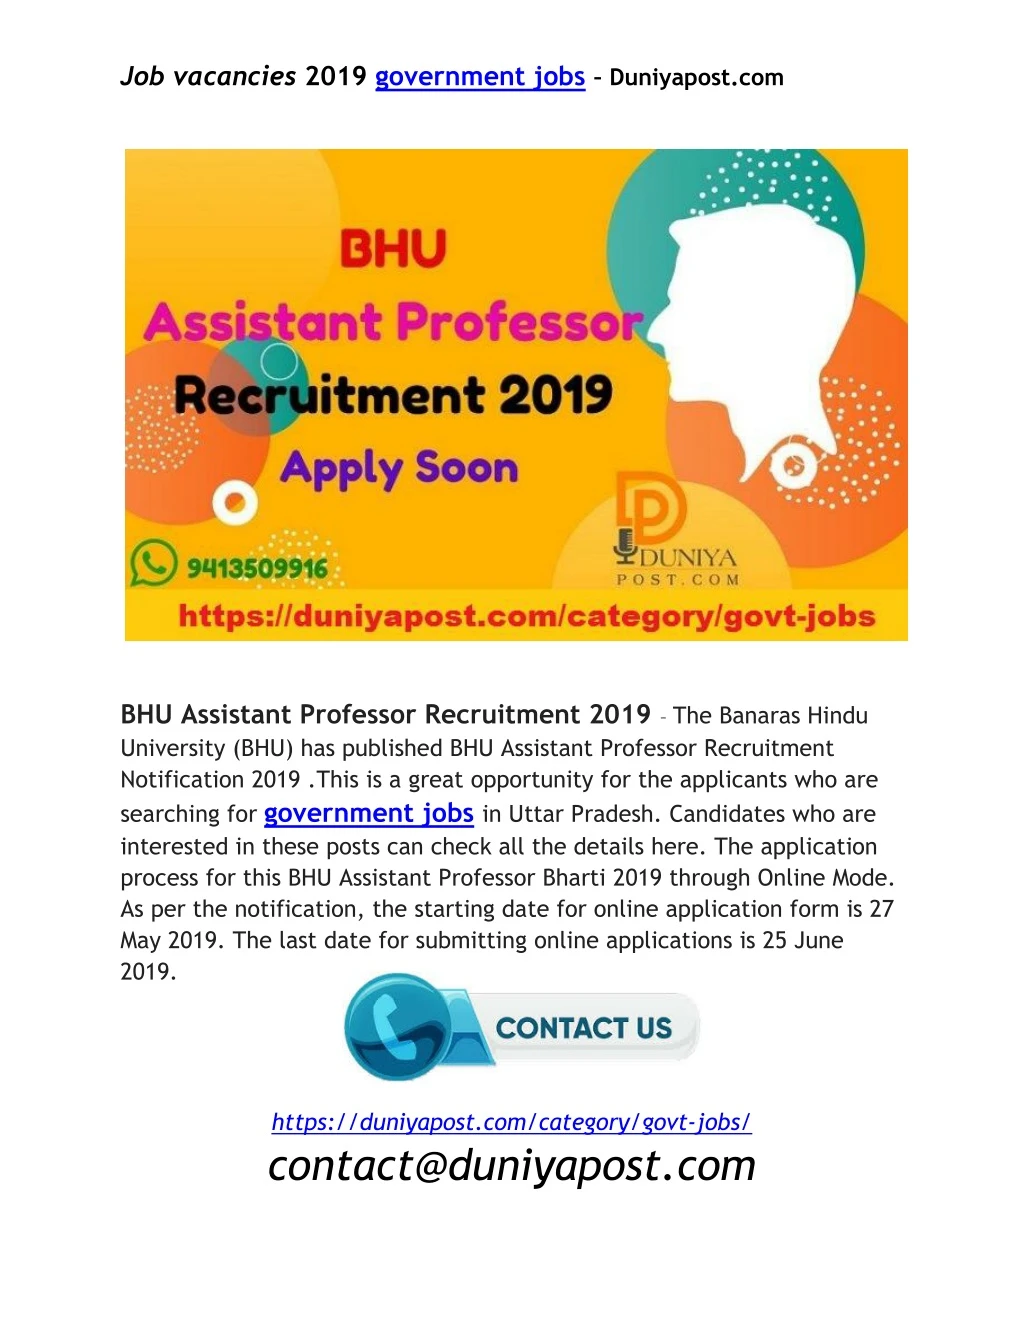 job vacancies 2019 government jobs duniyapost com